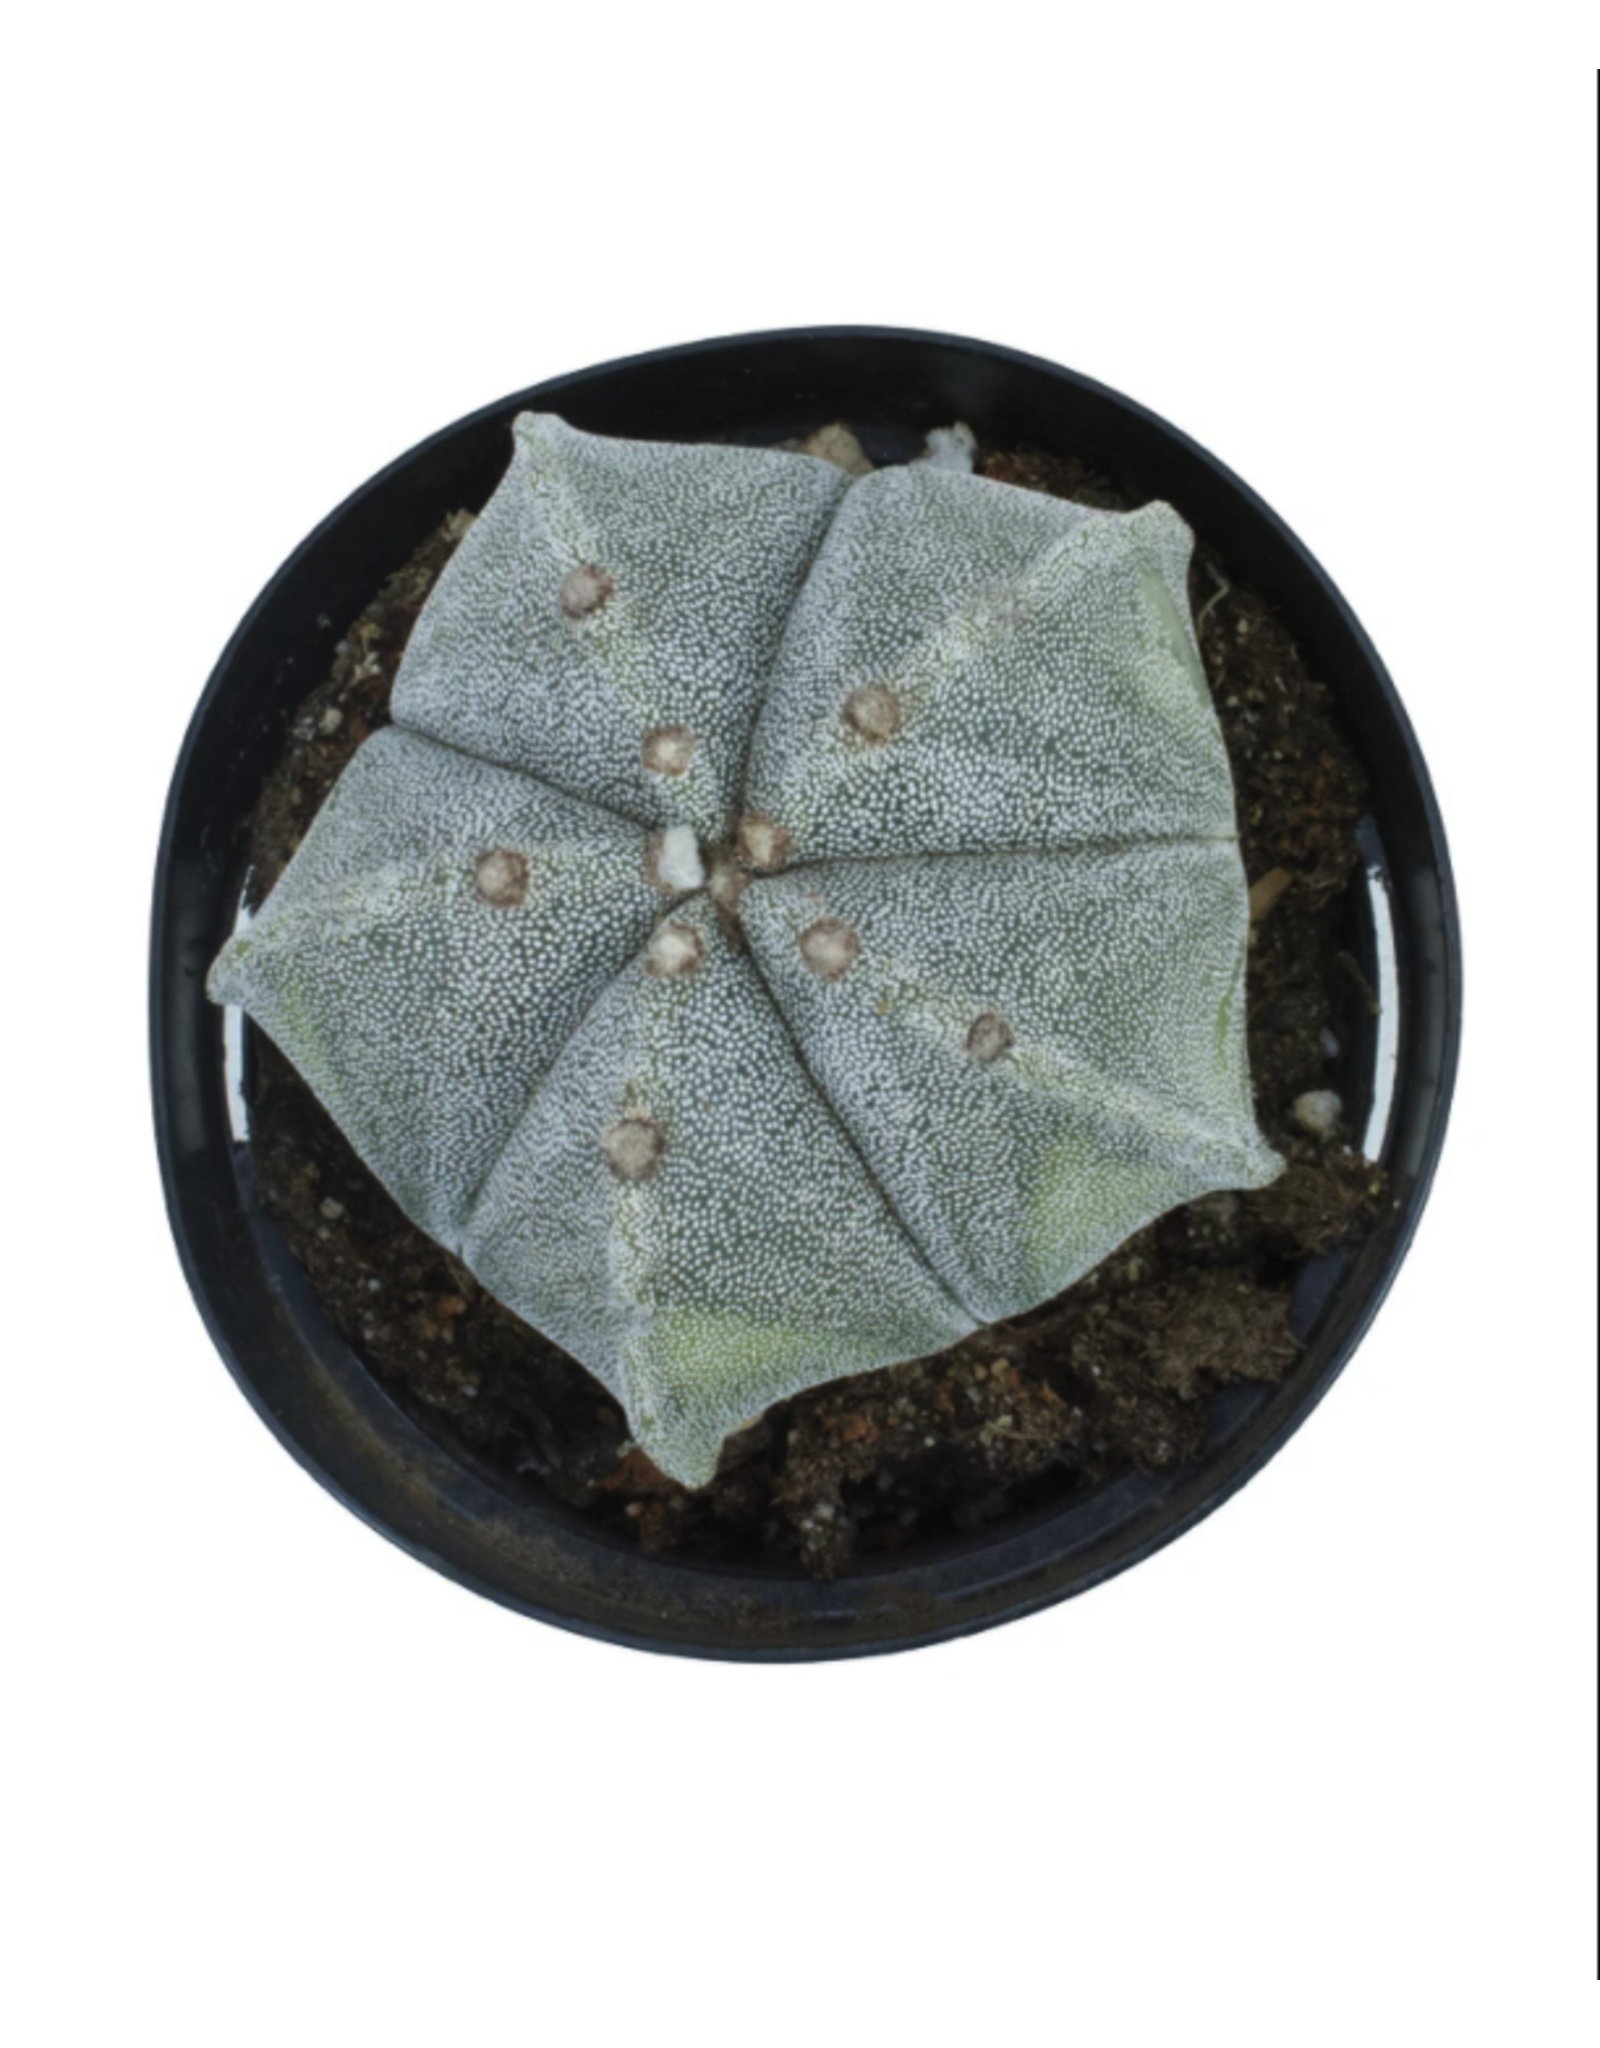 Cactus - Astrophytum myriostigma 4"